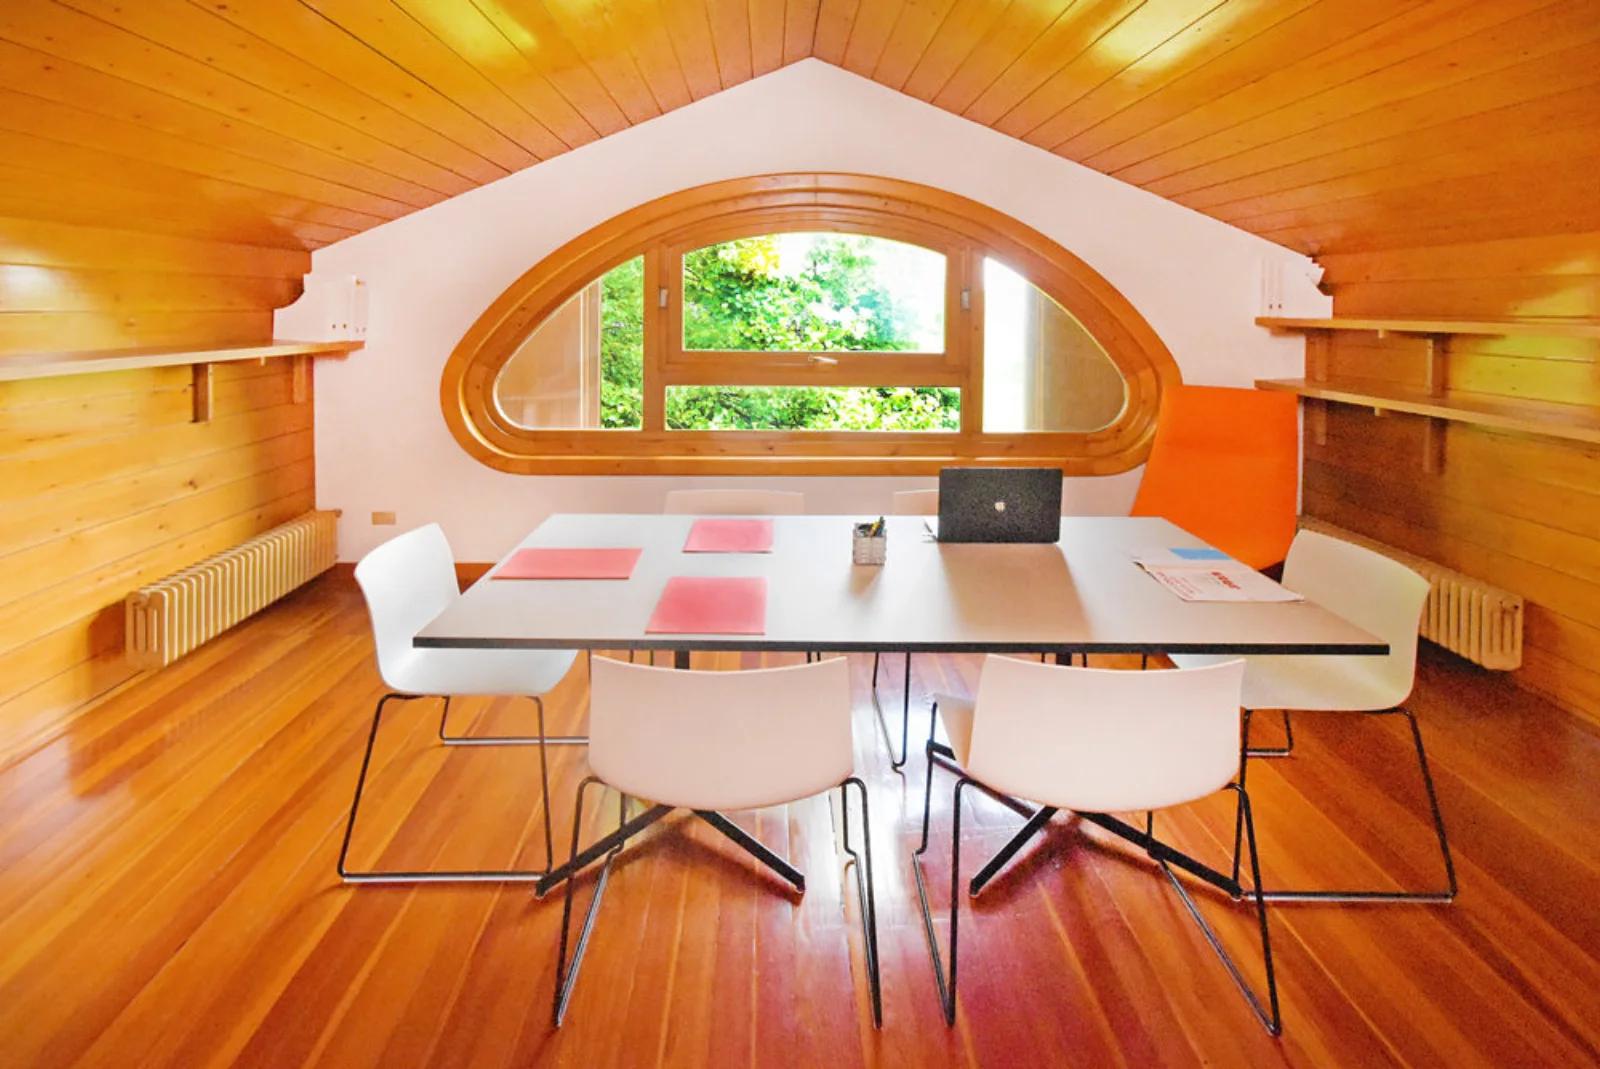 Comedor dentro Casa moderna y orgánica diseñada por un arquitecto - 1